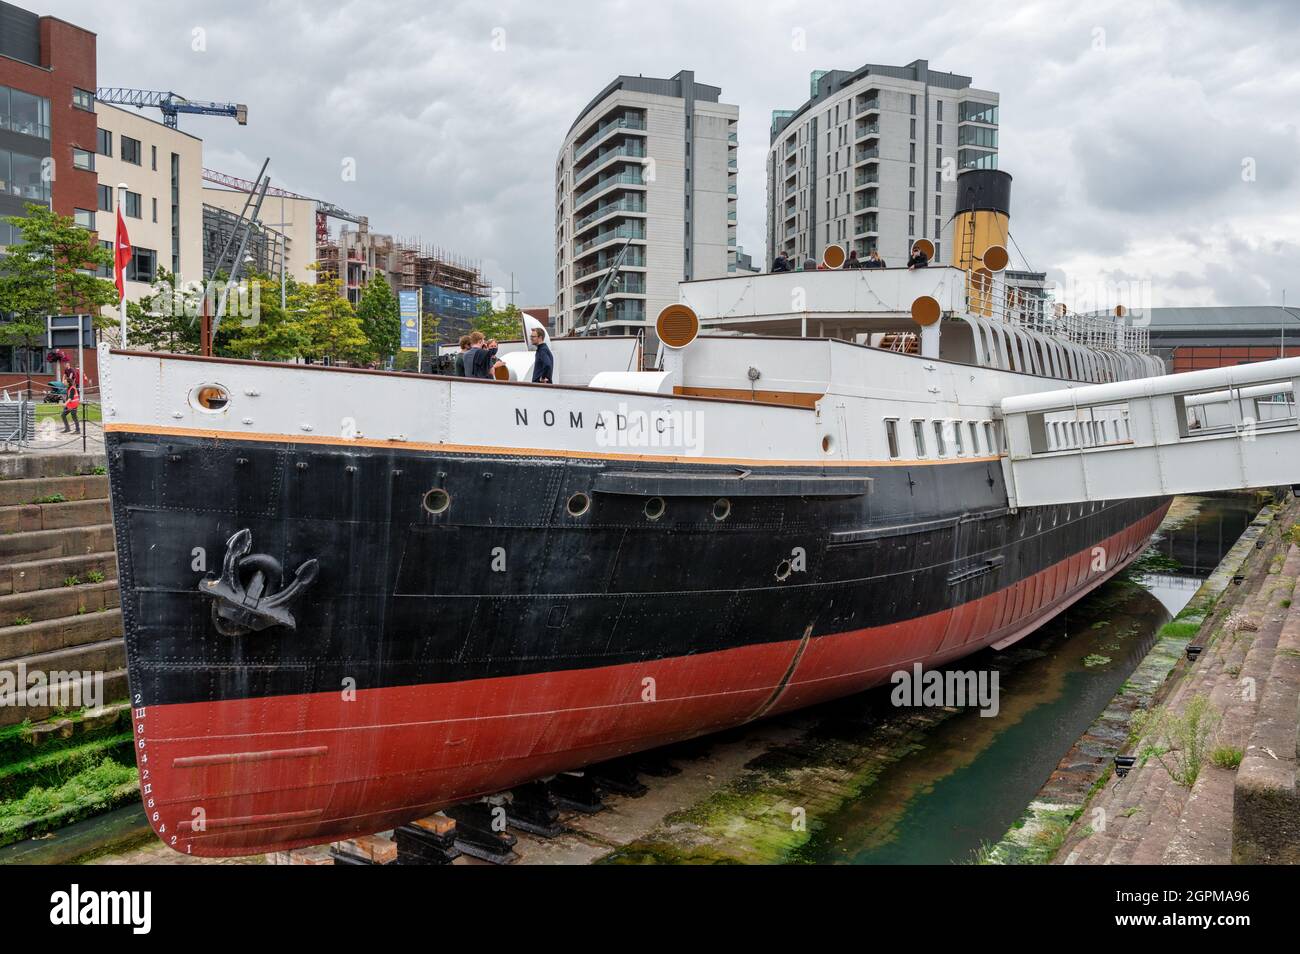 Belfast, N.Ireland - 4. September 2021: Das Boot des Nomadic Cherbough in der Nähe des Titanic Museums in Belfast. Stockfoto